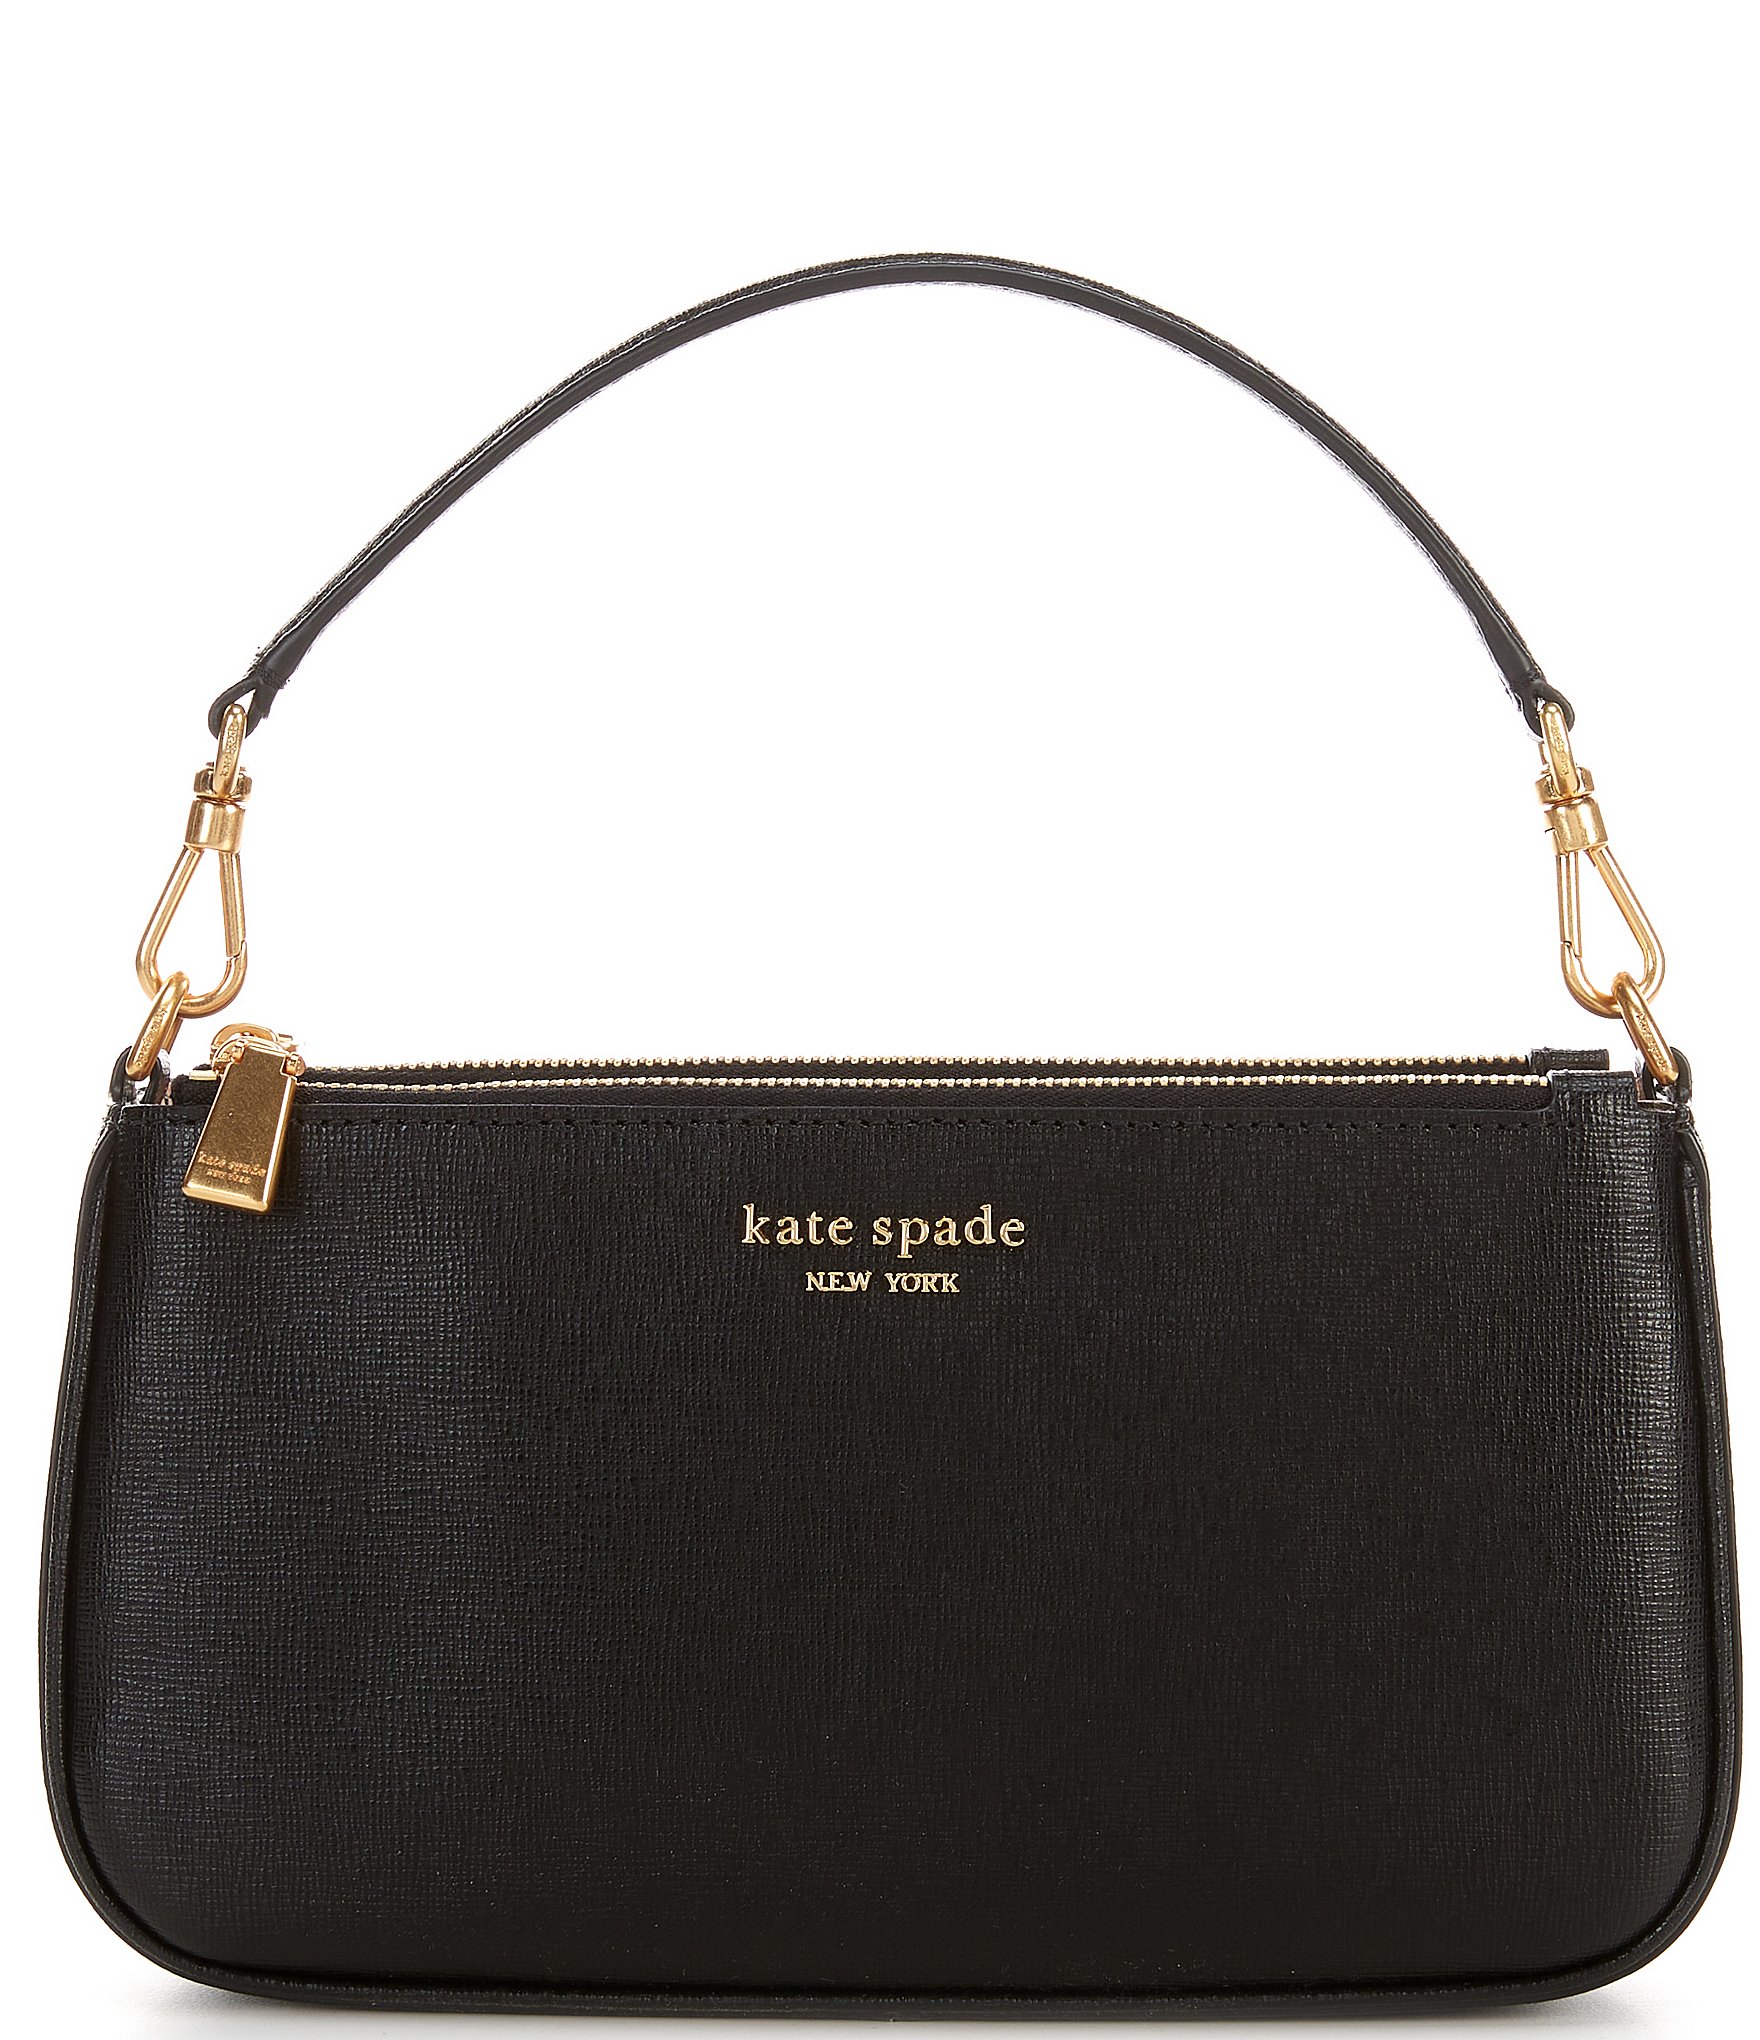 Handbags & Bags Australia | Kate Spade 10% OFF Sign-Up Offer